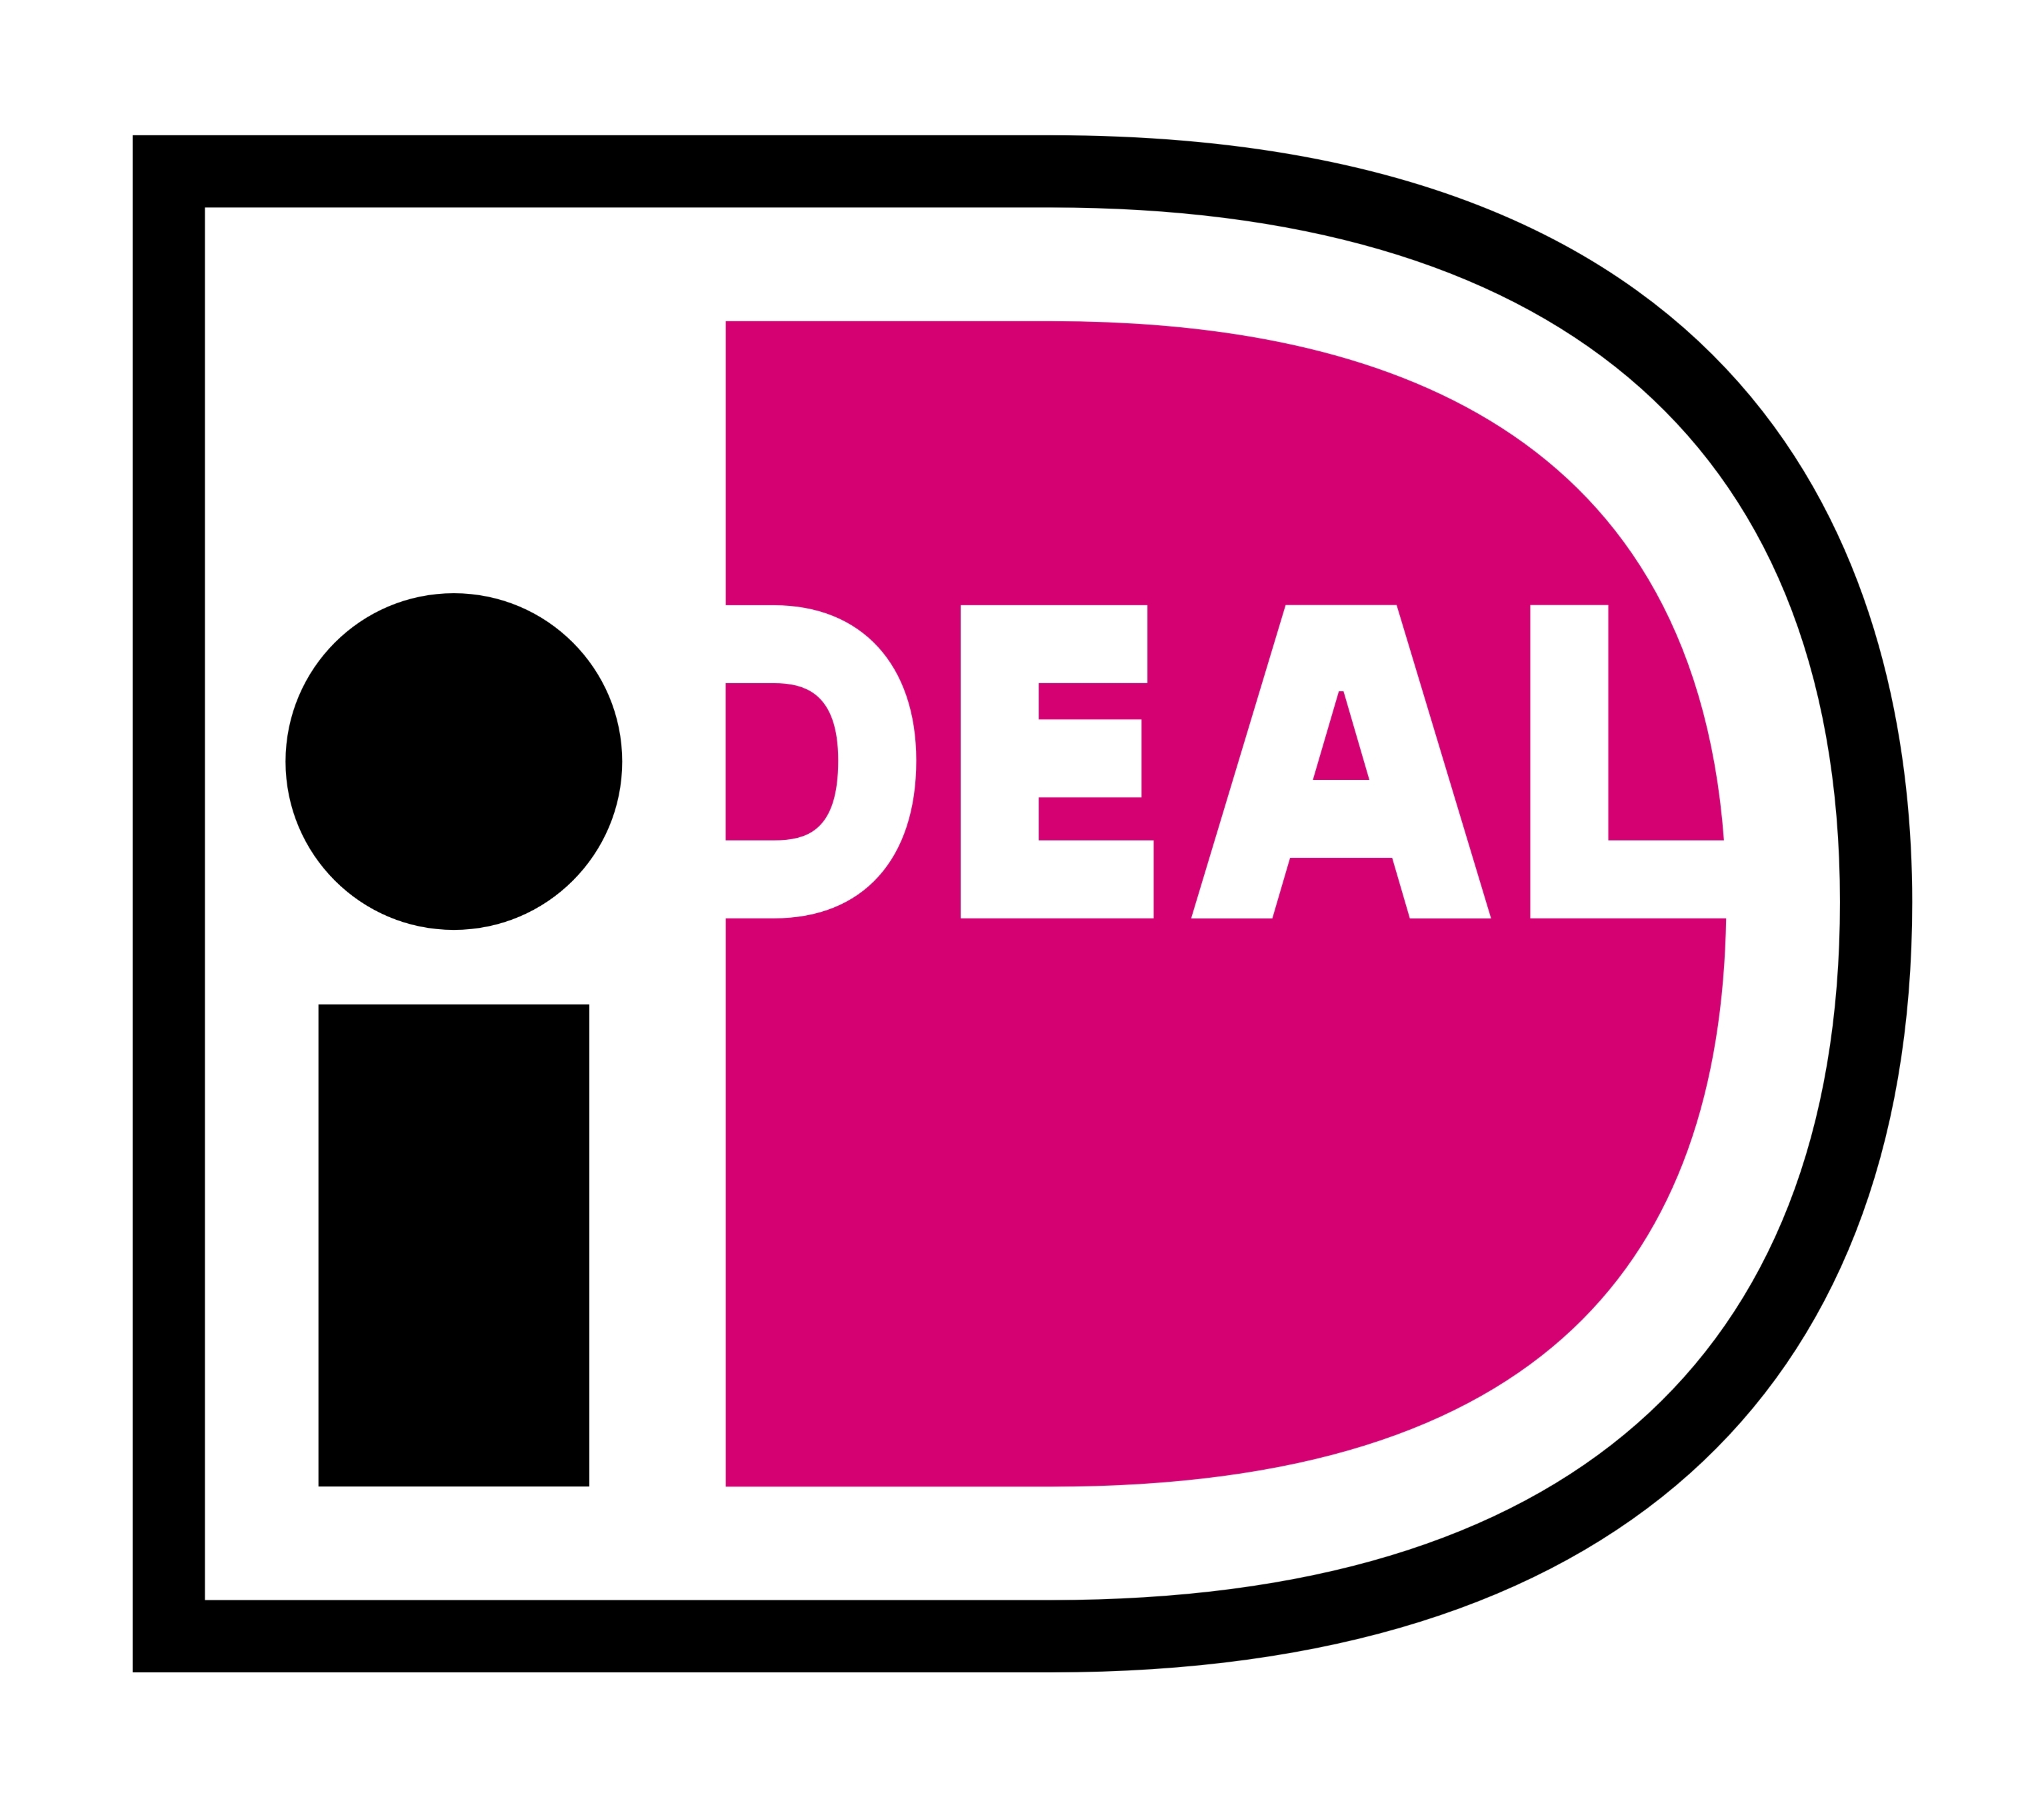 ideal_logo